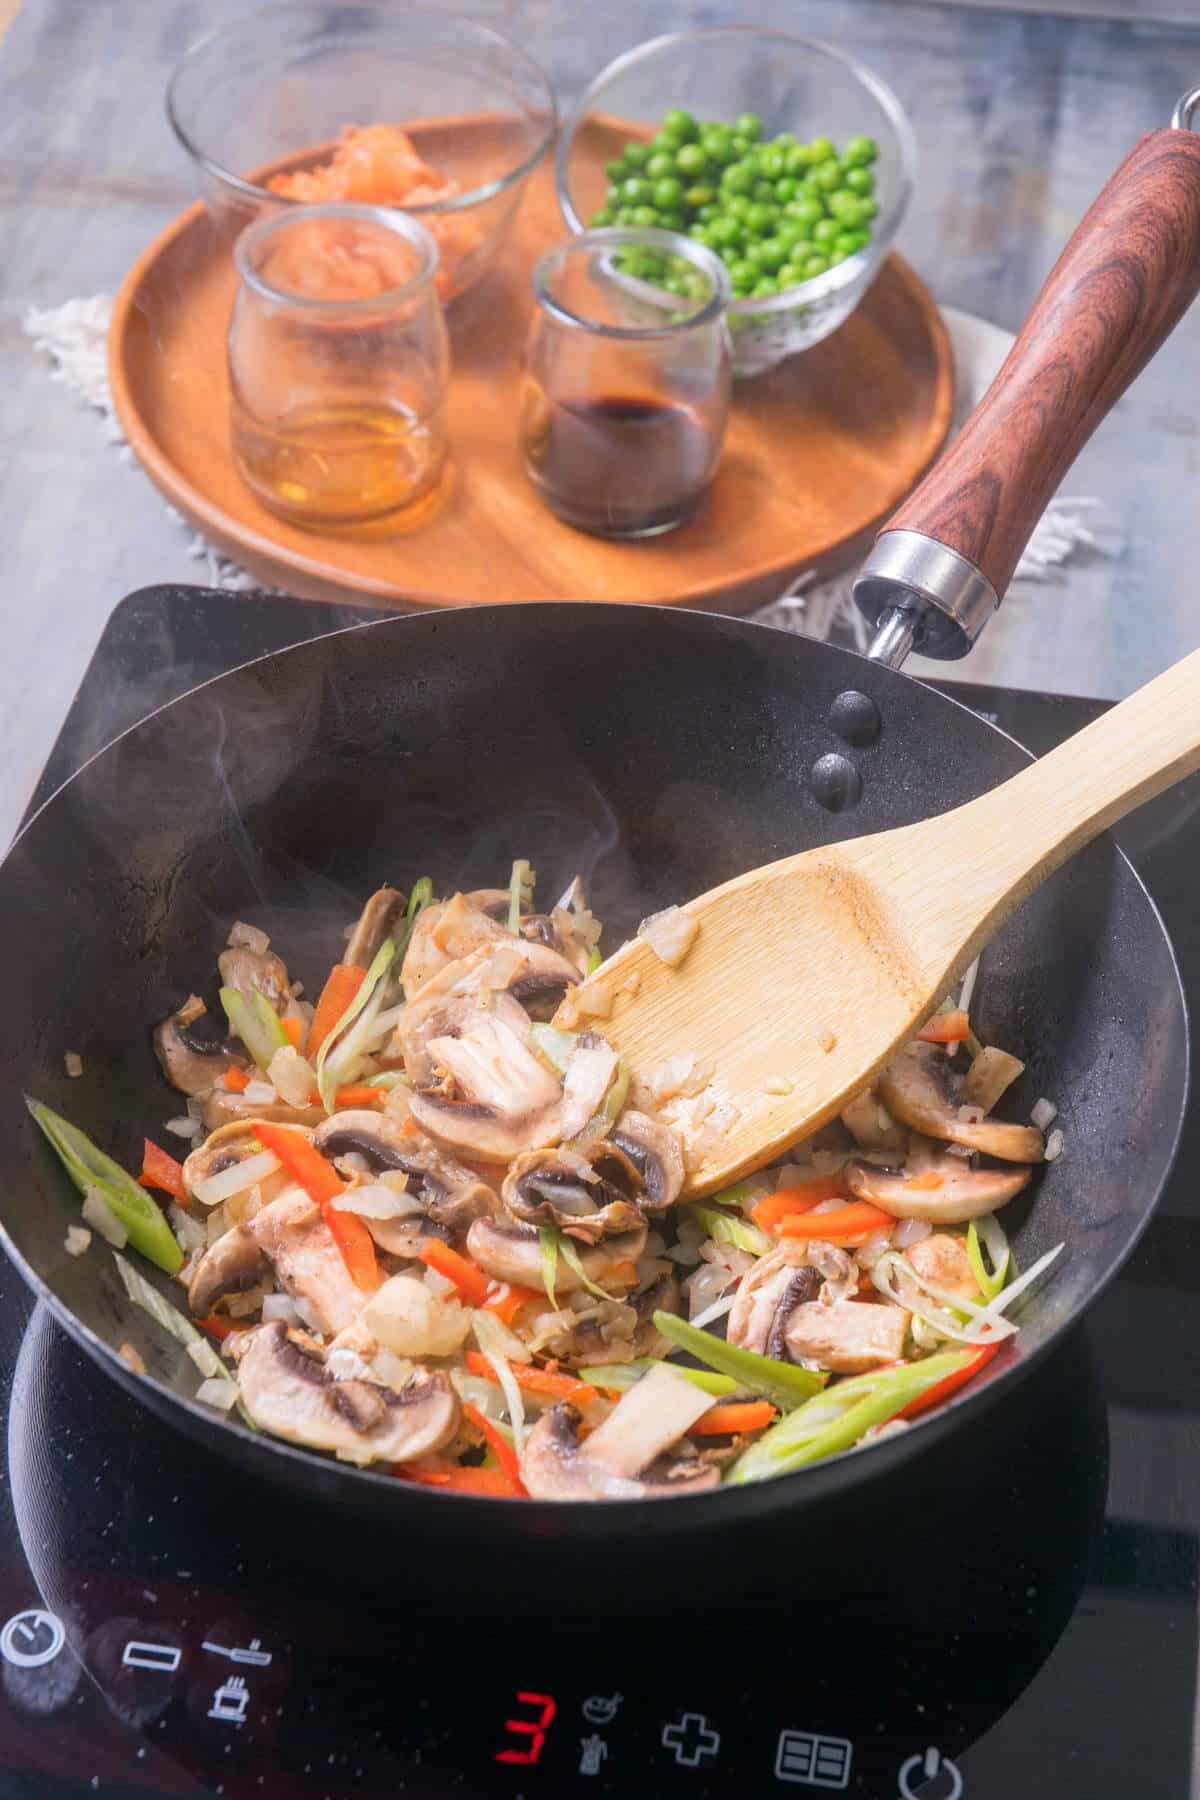 Stir fried veggies in pan with wooden spoon.